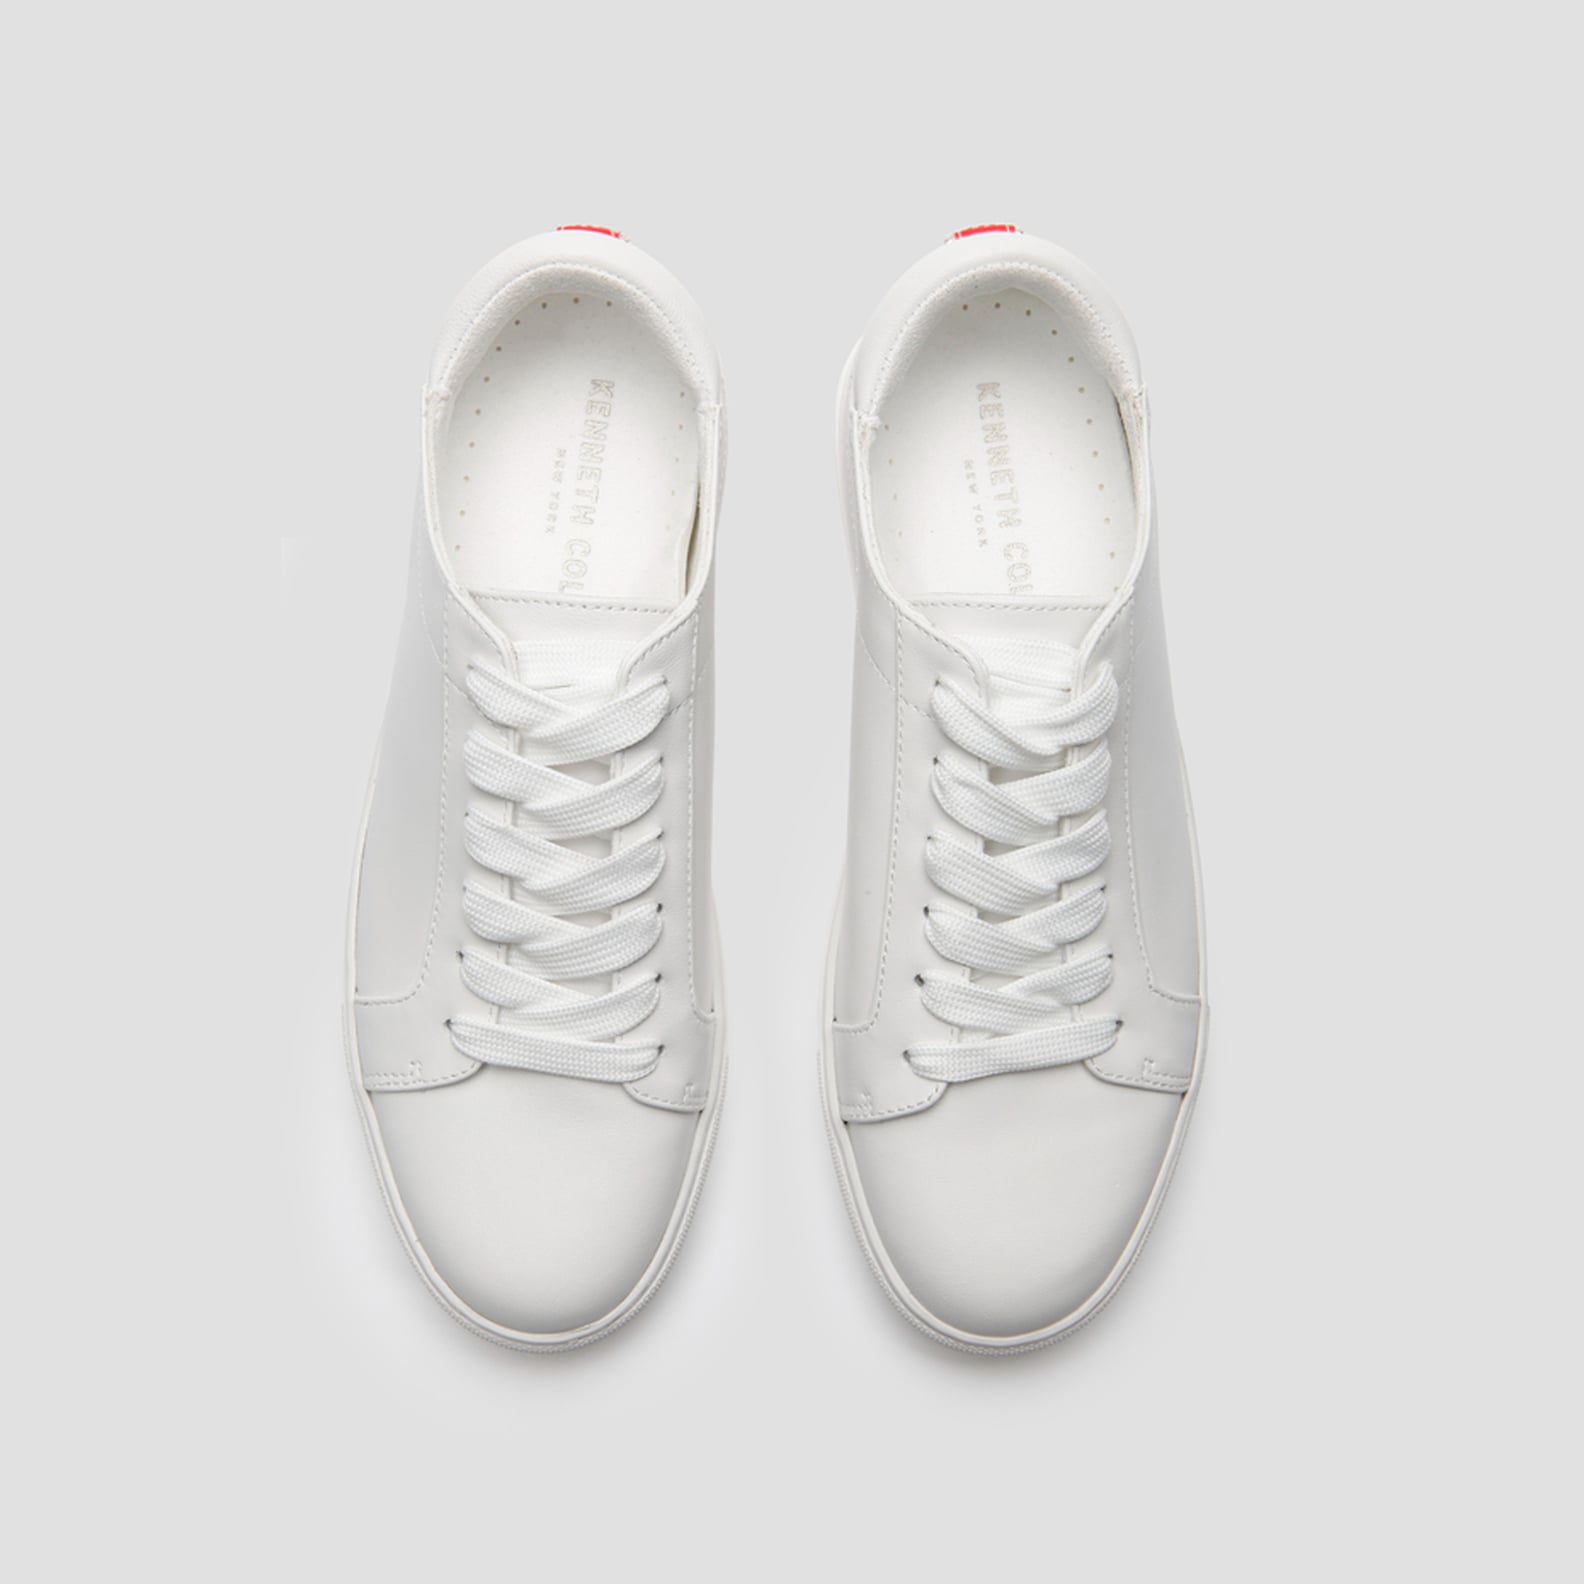 Kerry Washington's Kenneth Cole Pride Sneakers | POPSUGAR Fashion